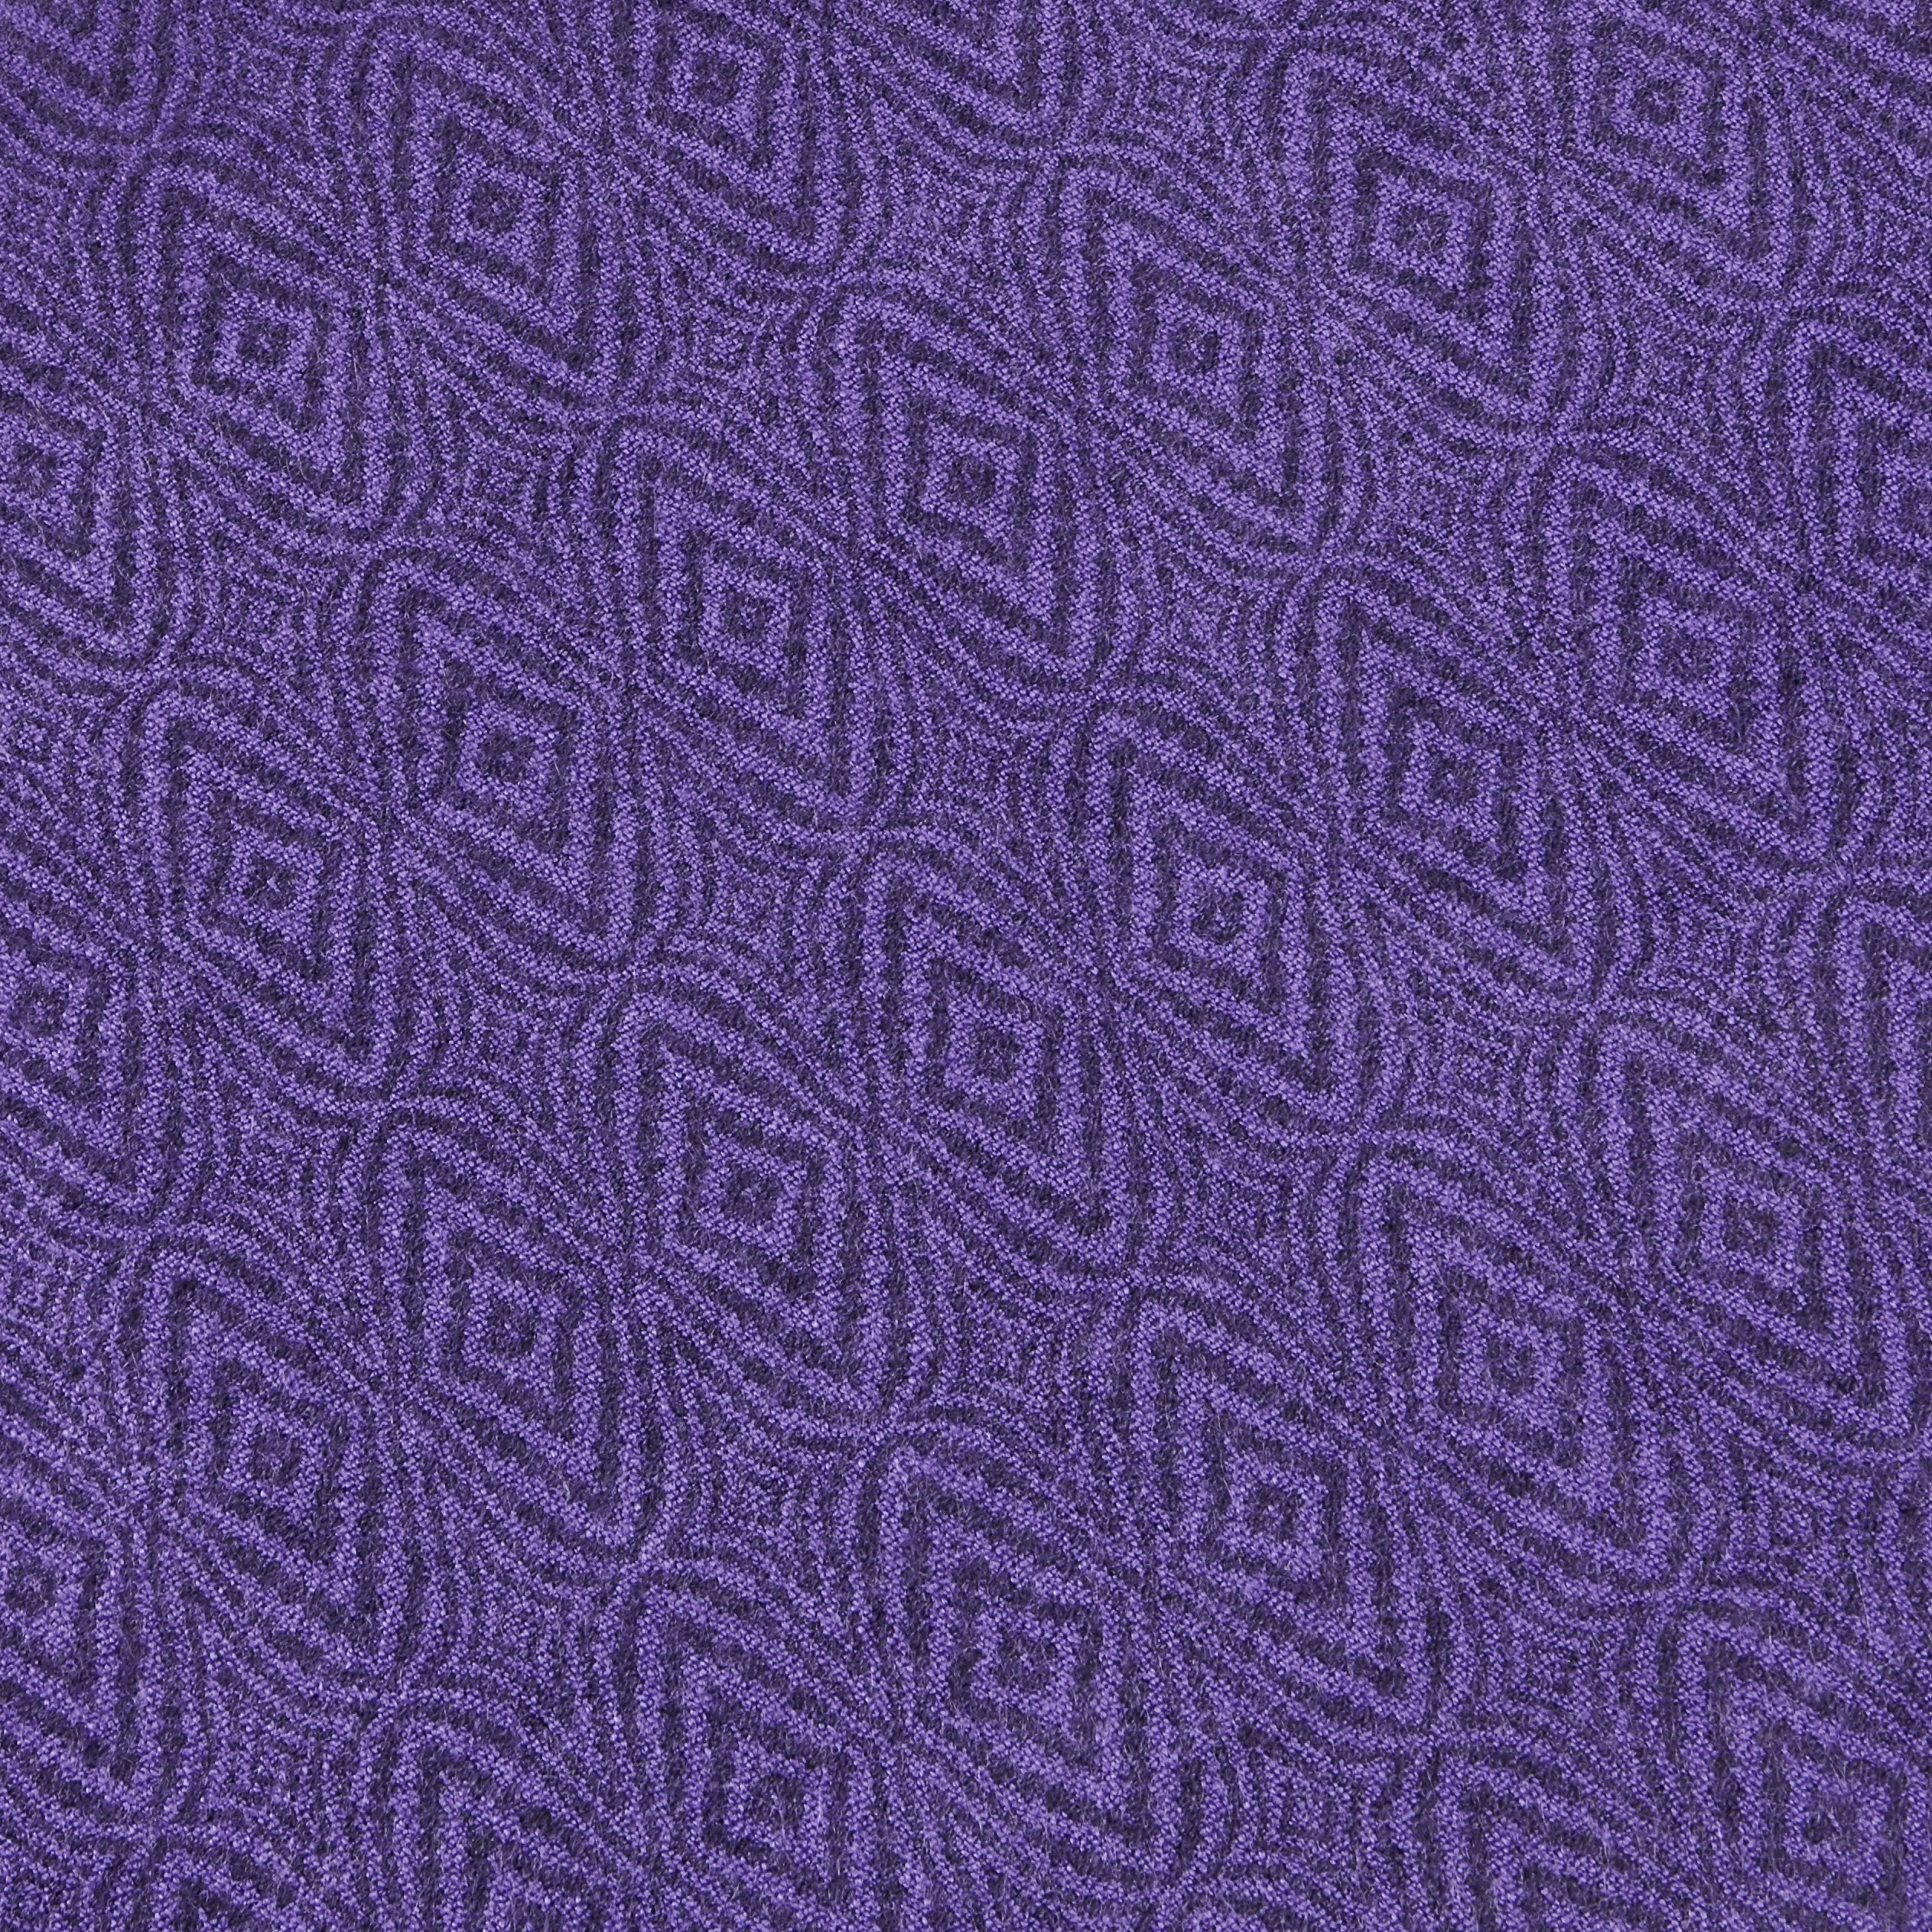 Purple Infinity Scarf - Ecuadane